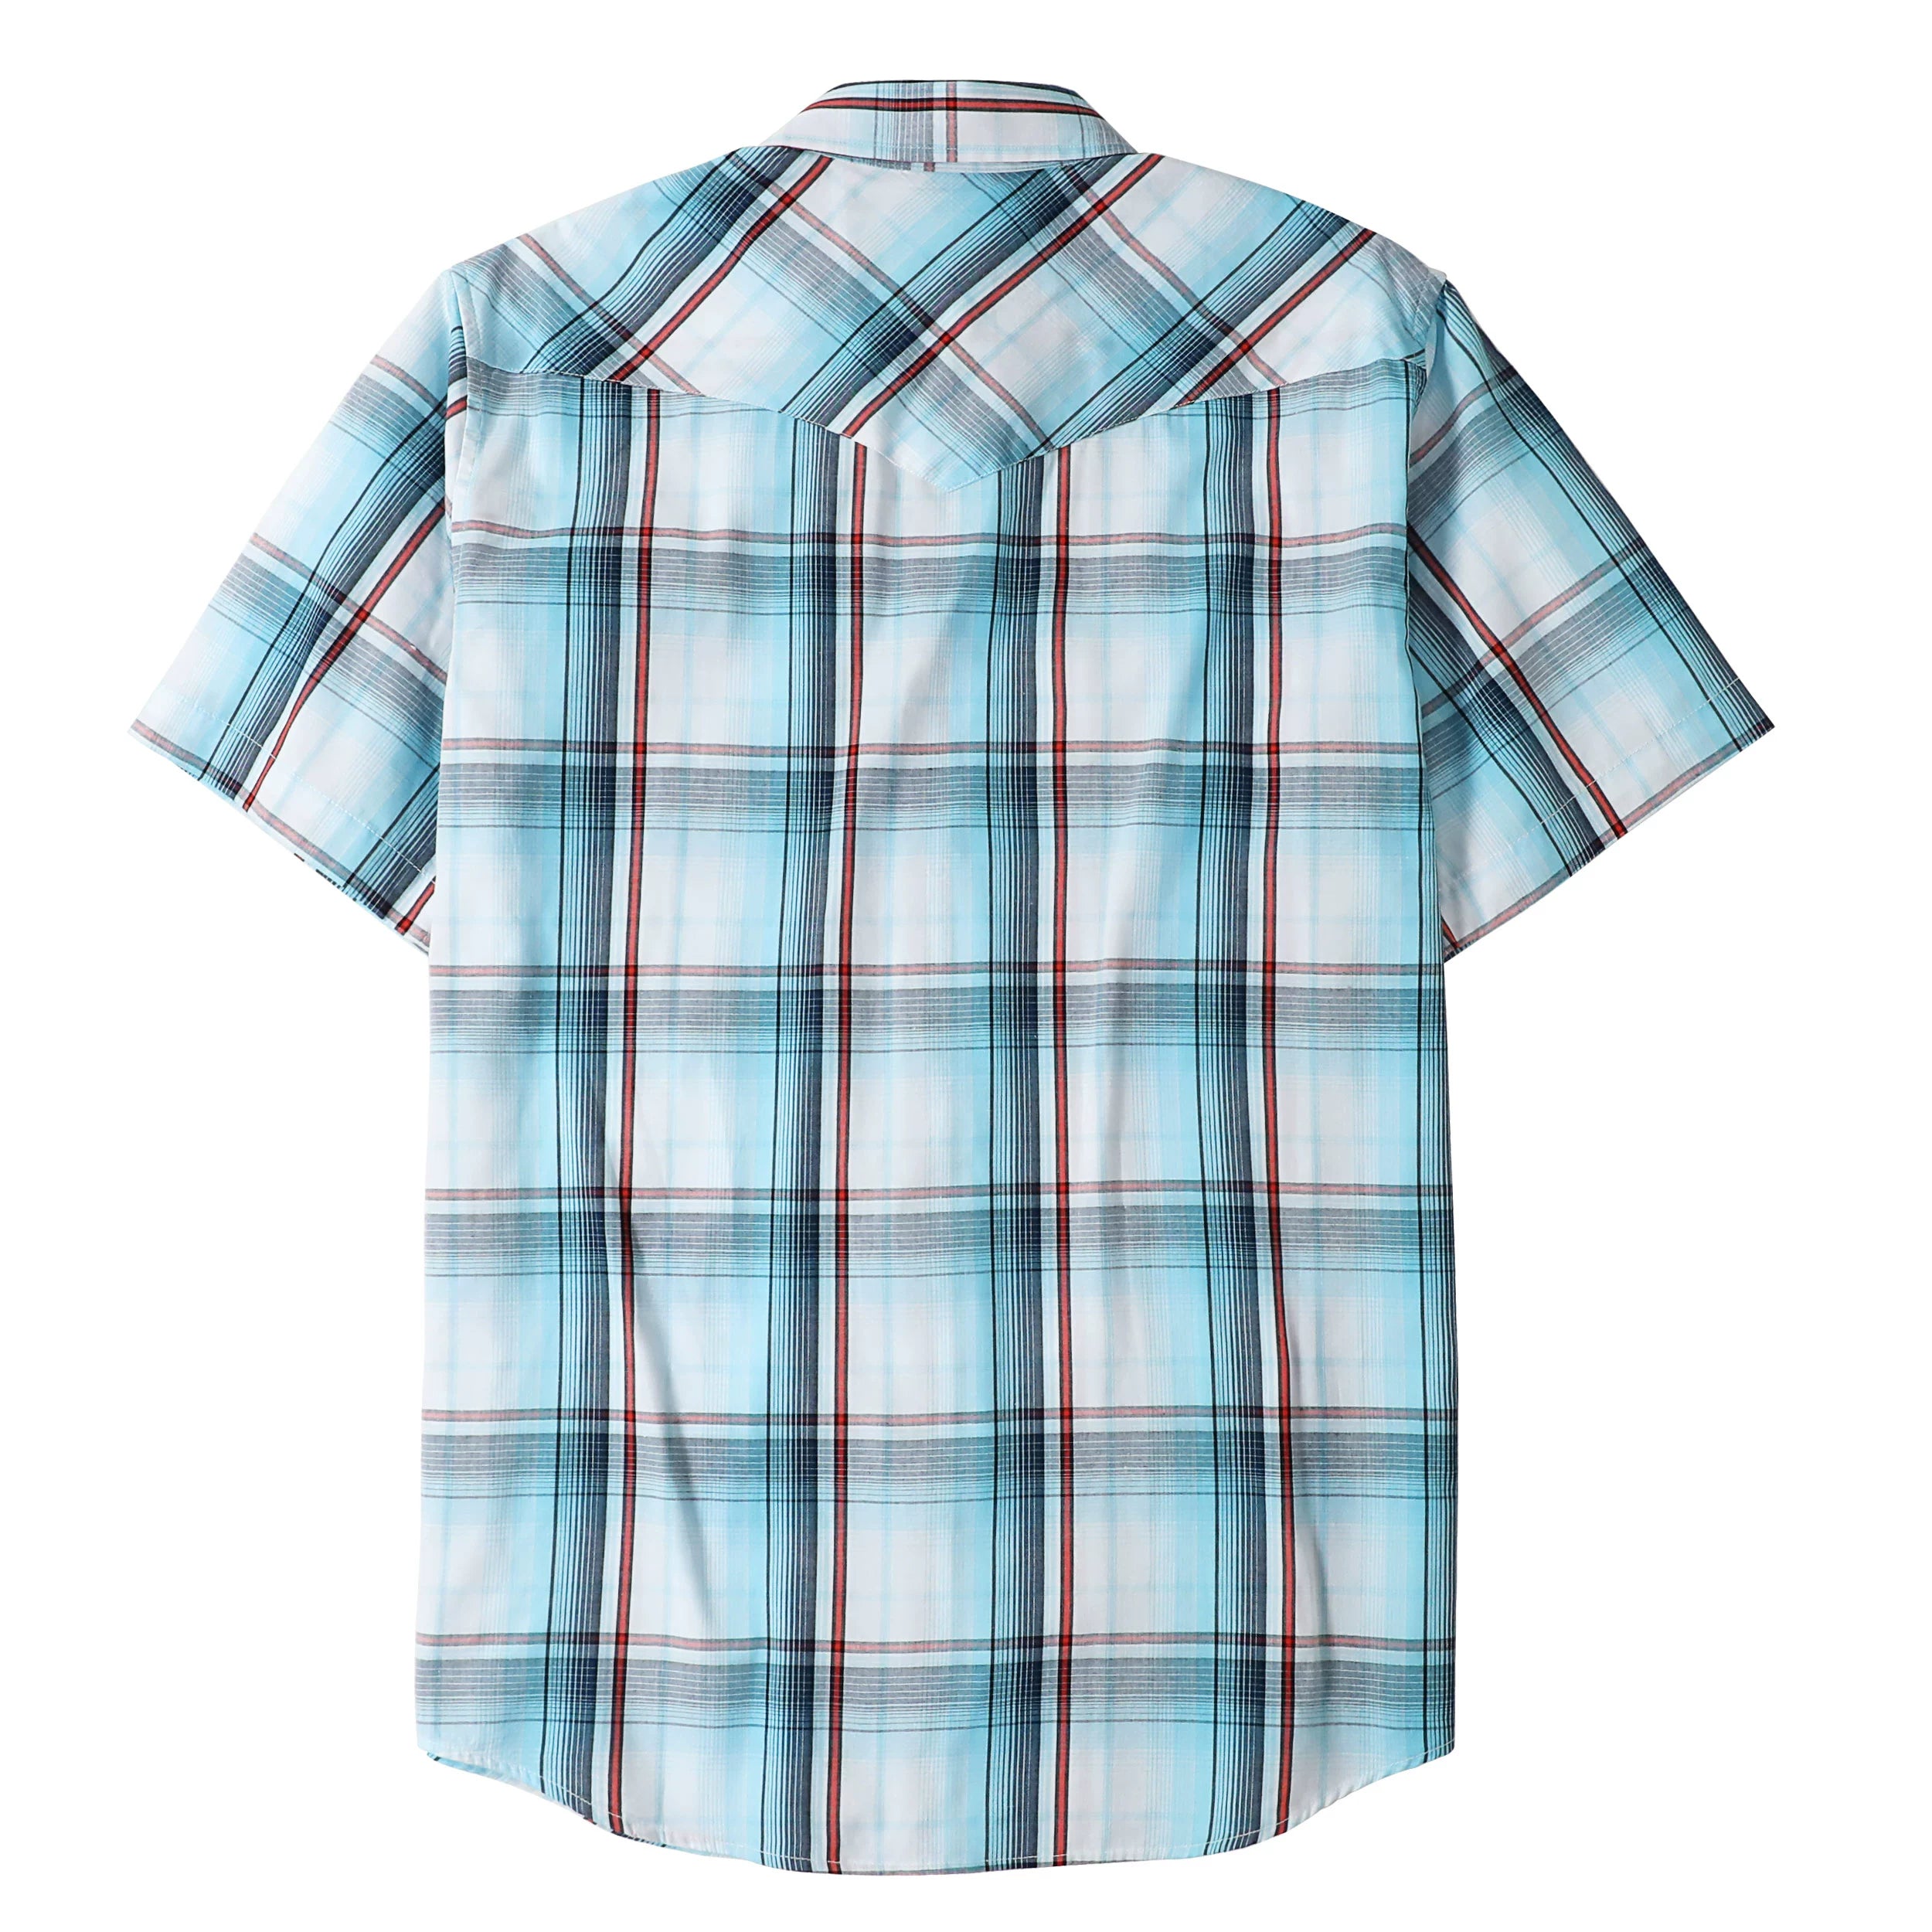 Dubinik® Western Shirts for Men Short Sleeve Plaid Pearl Snap Shirts for Men Button Up Shirt Cowboy Casual Work Shirt#41018